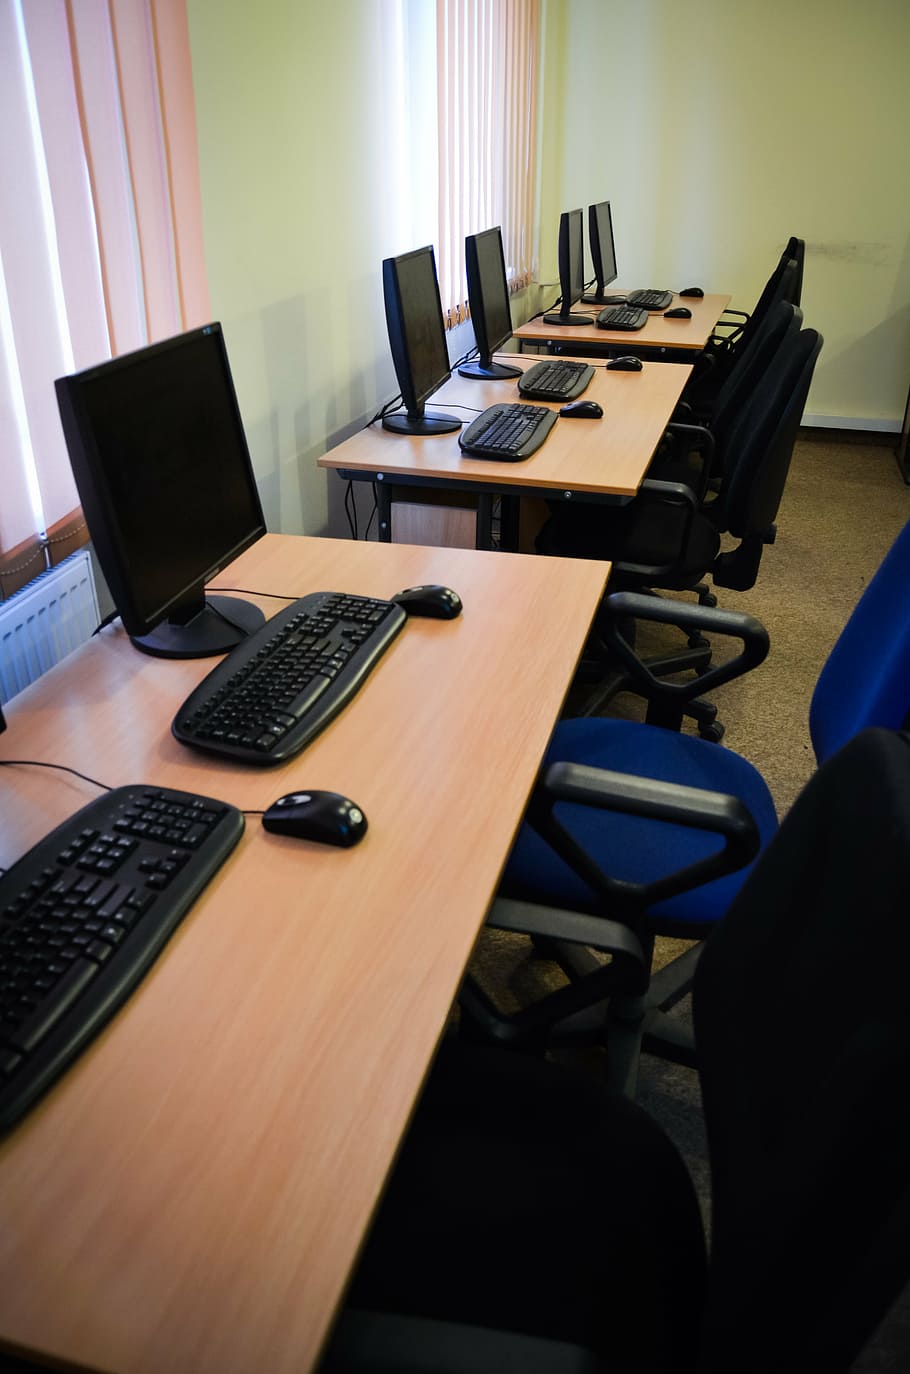 five, black, flat, screen computer monitors, brown, wooden, desks, school, room, training